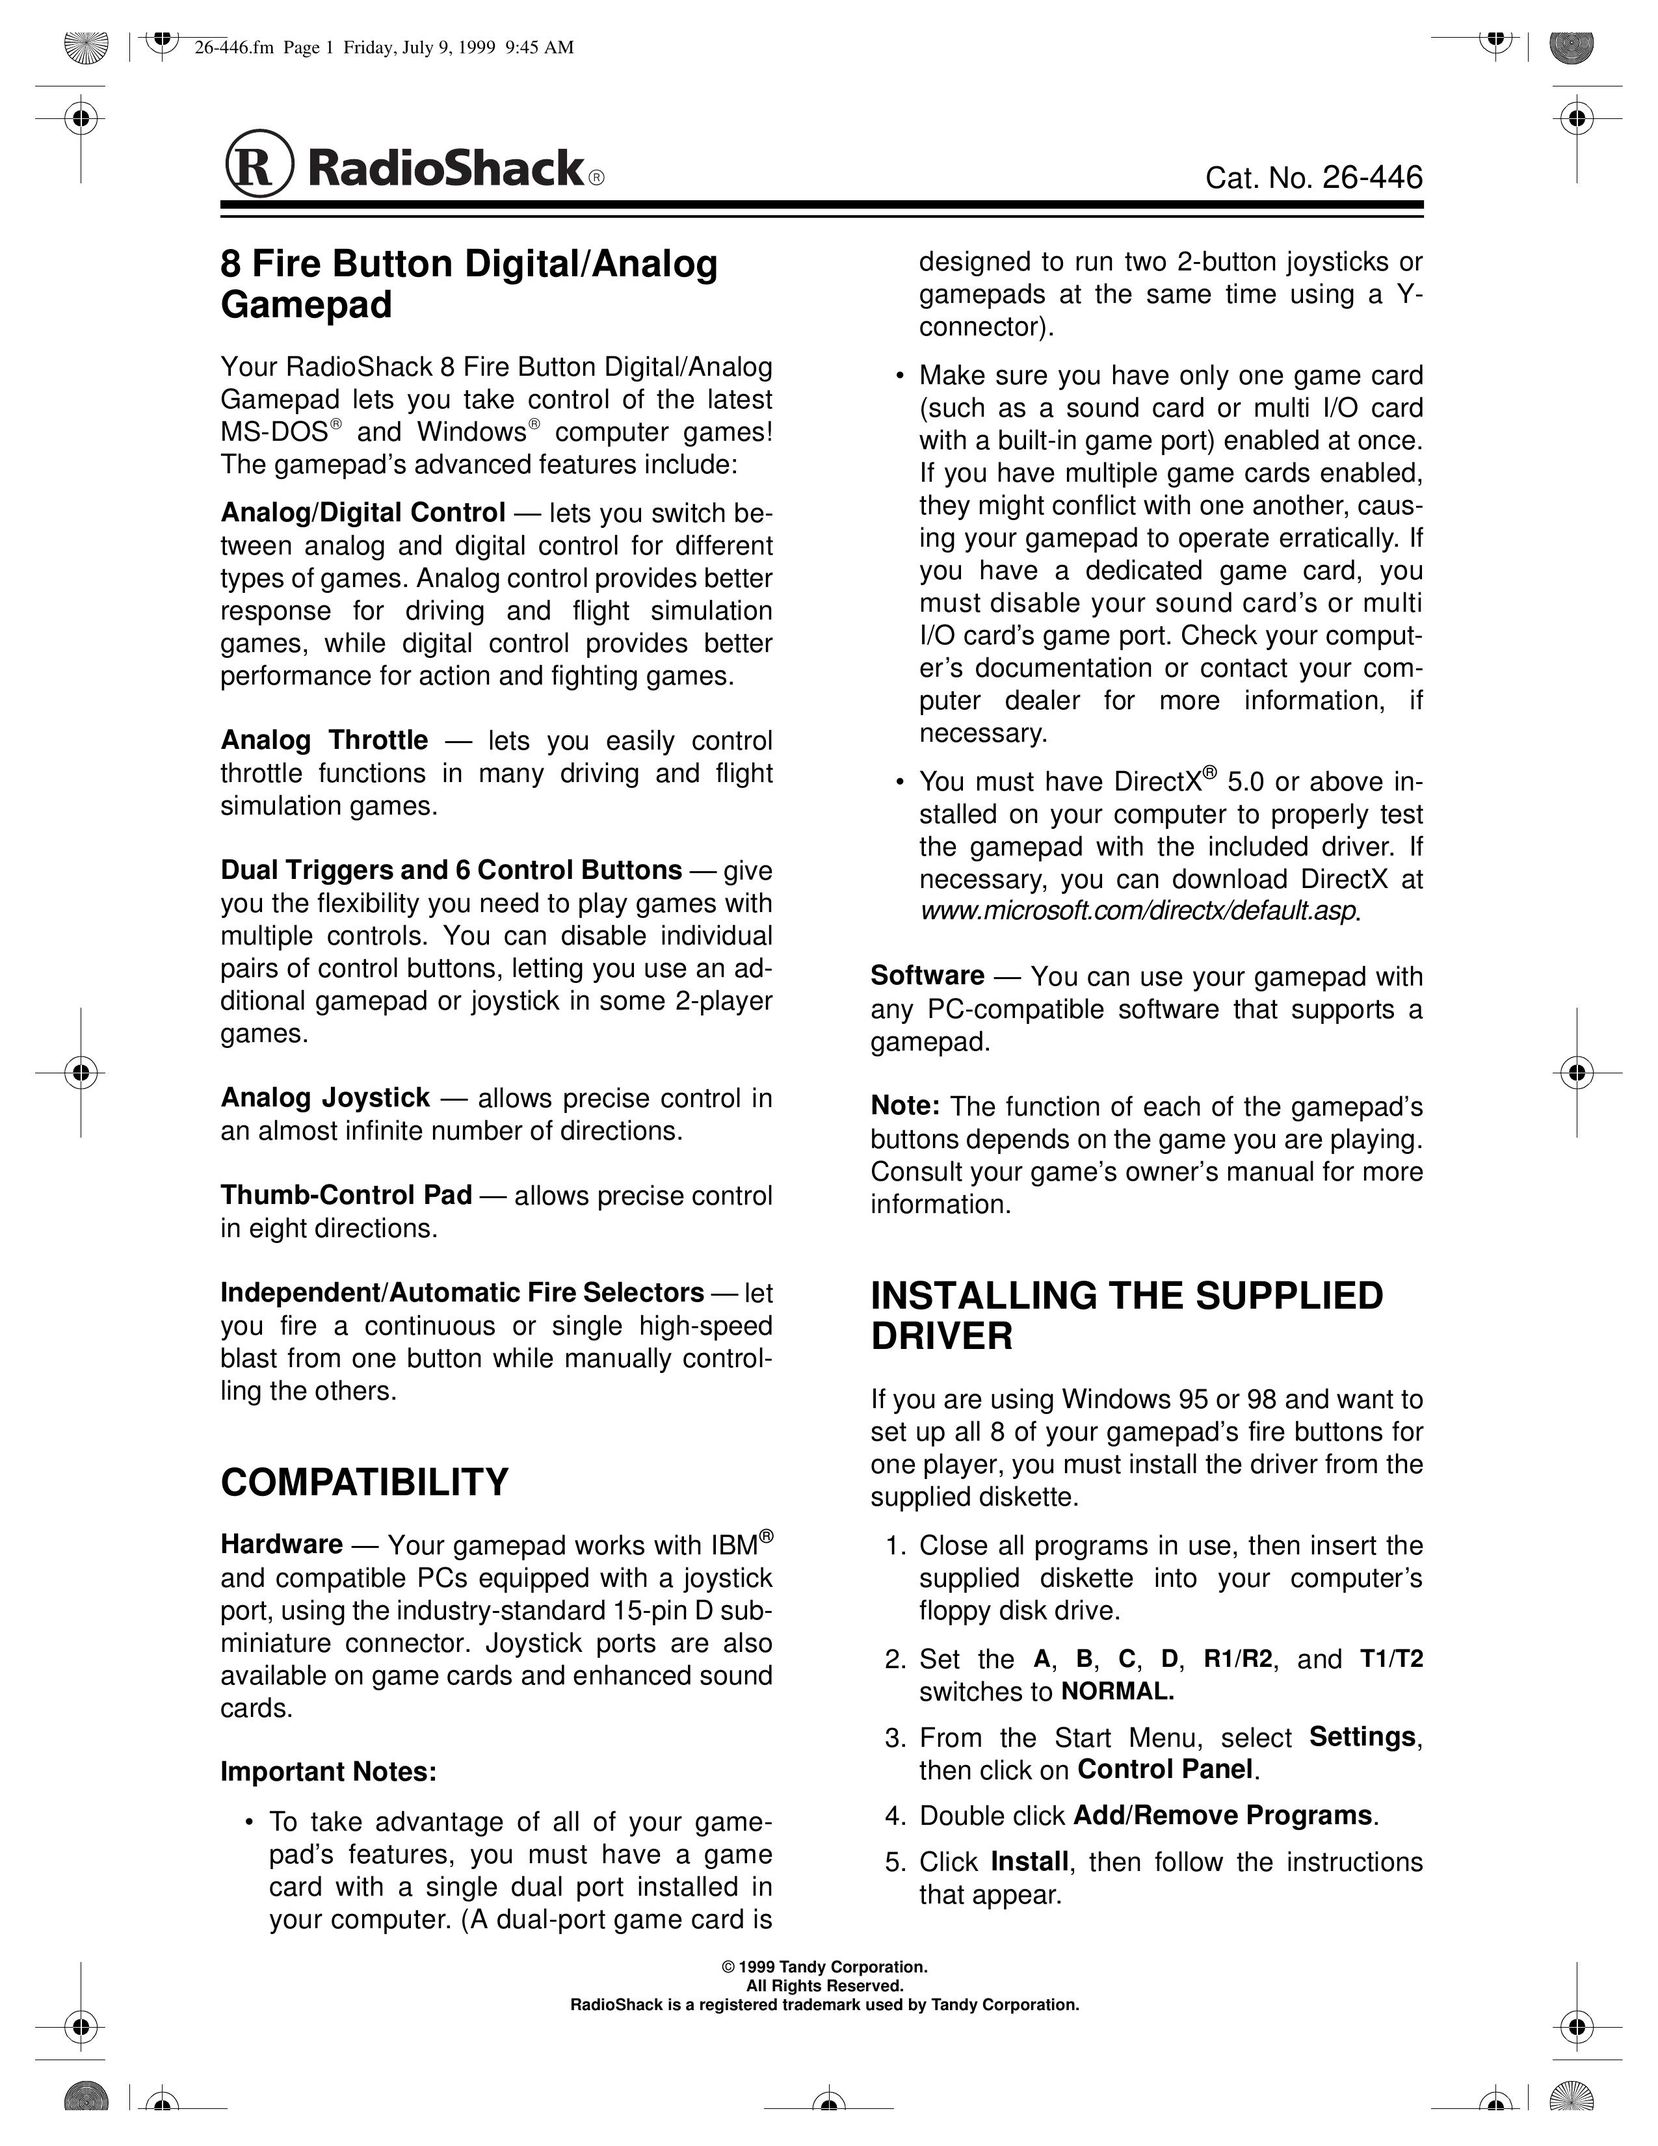 Samsung 26-446 Video Game Controller User Manual